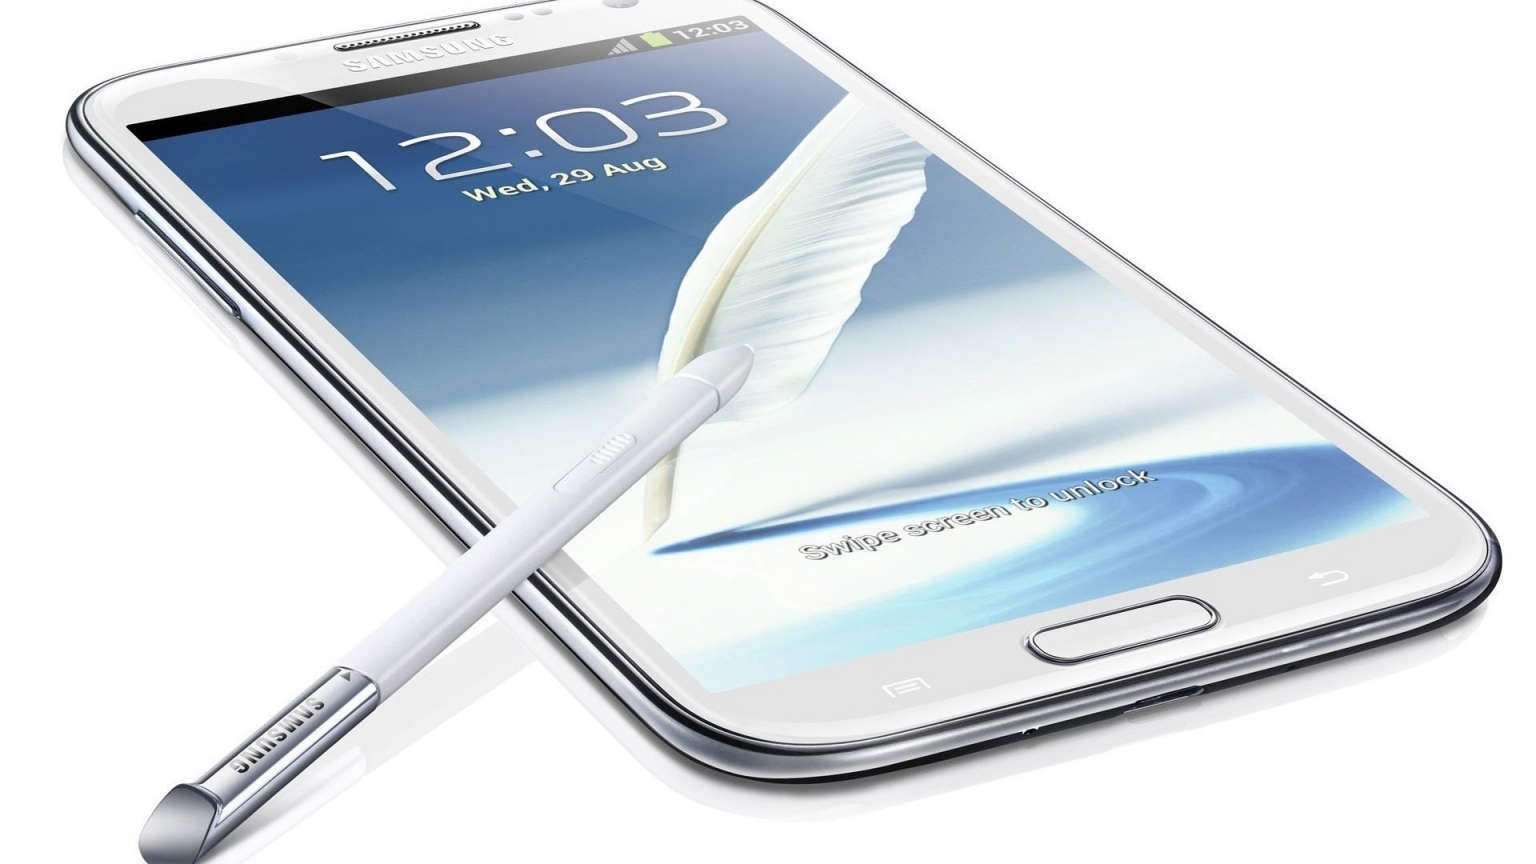 White Samsung Galaxy S3 for 1536 x 864 HDTV resolution